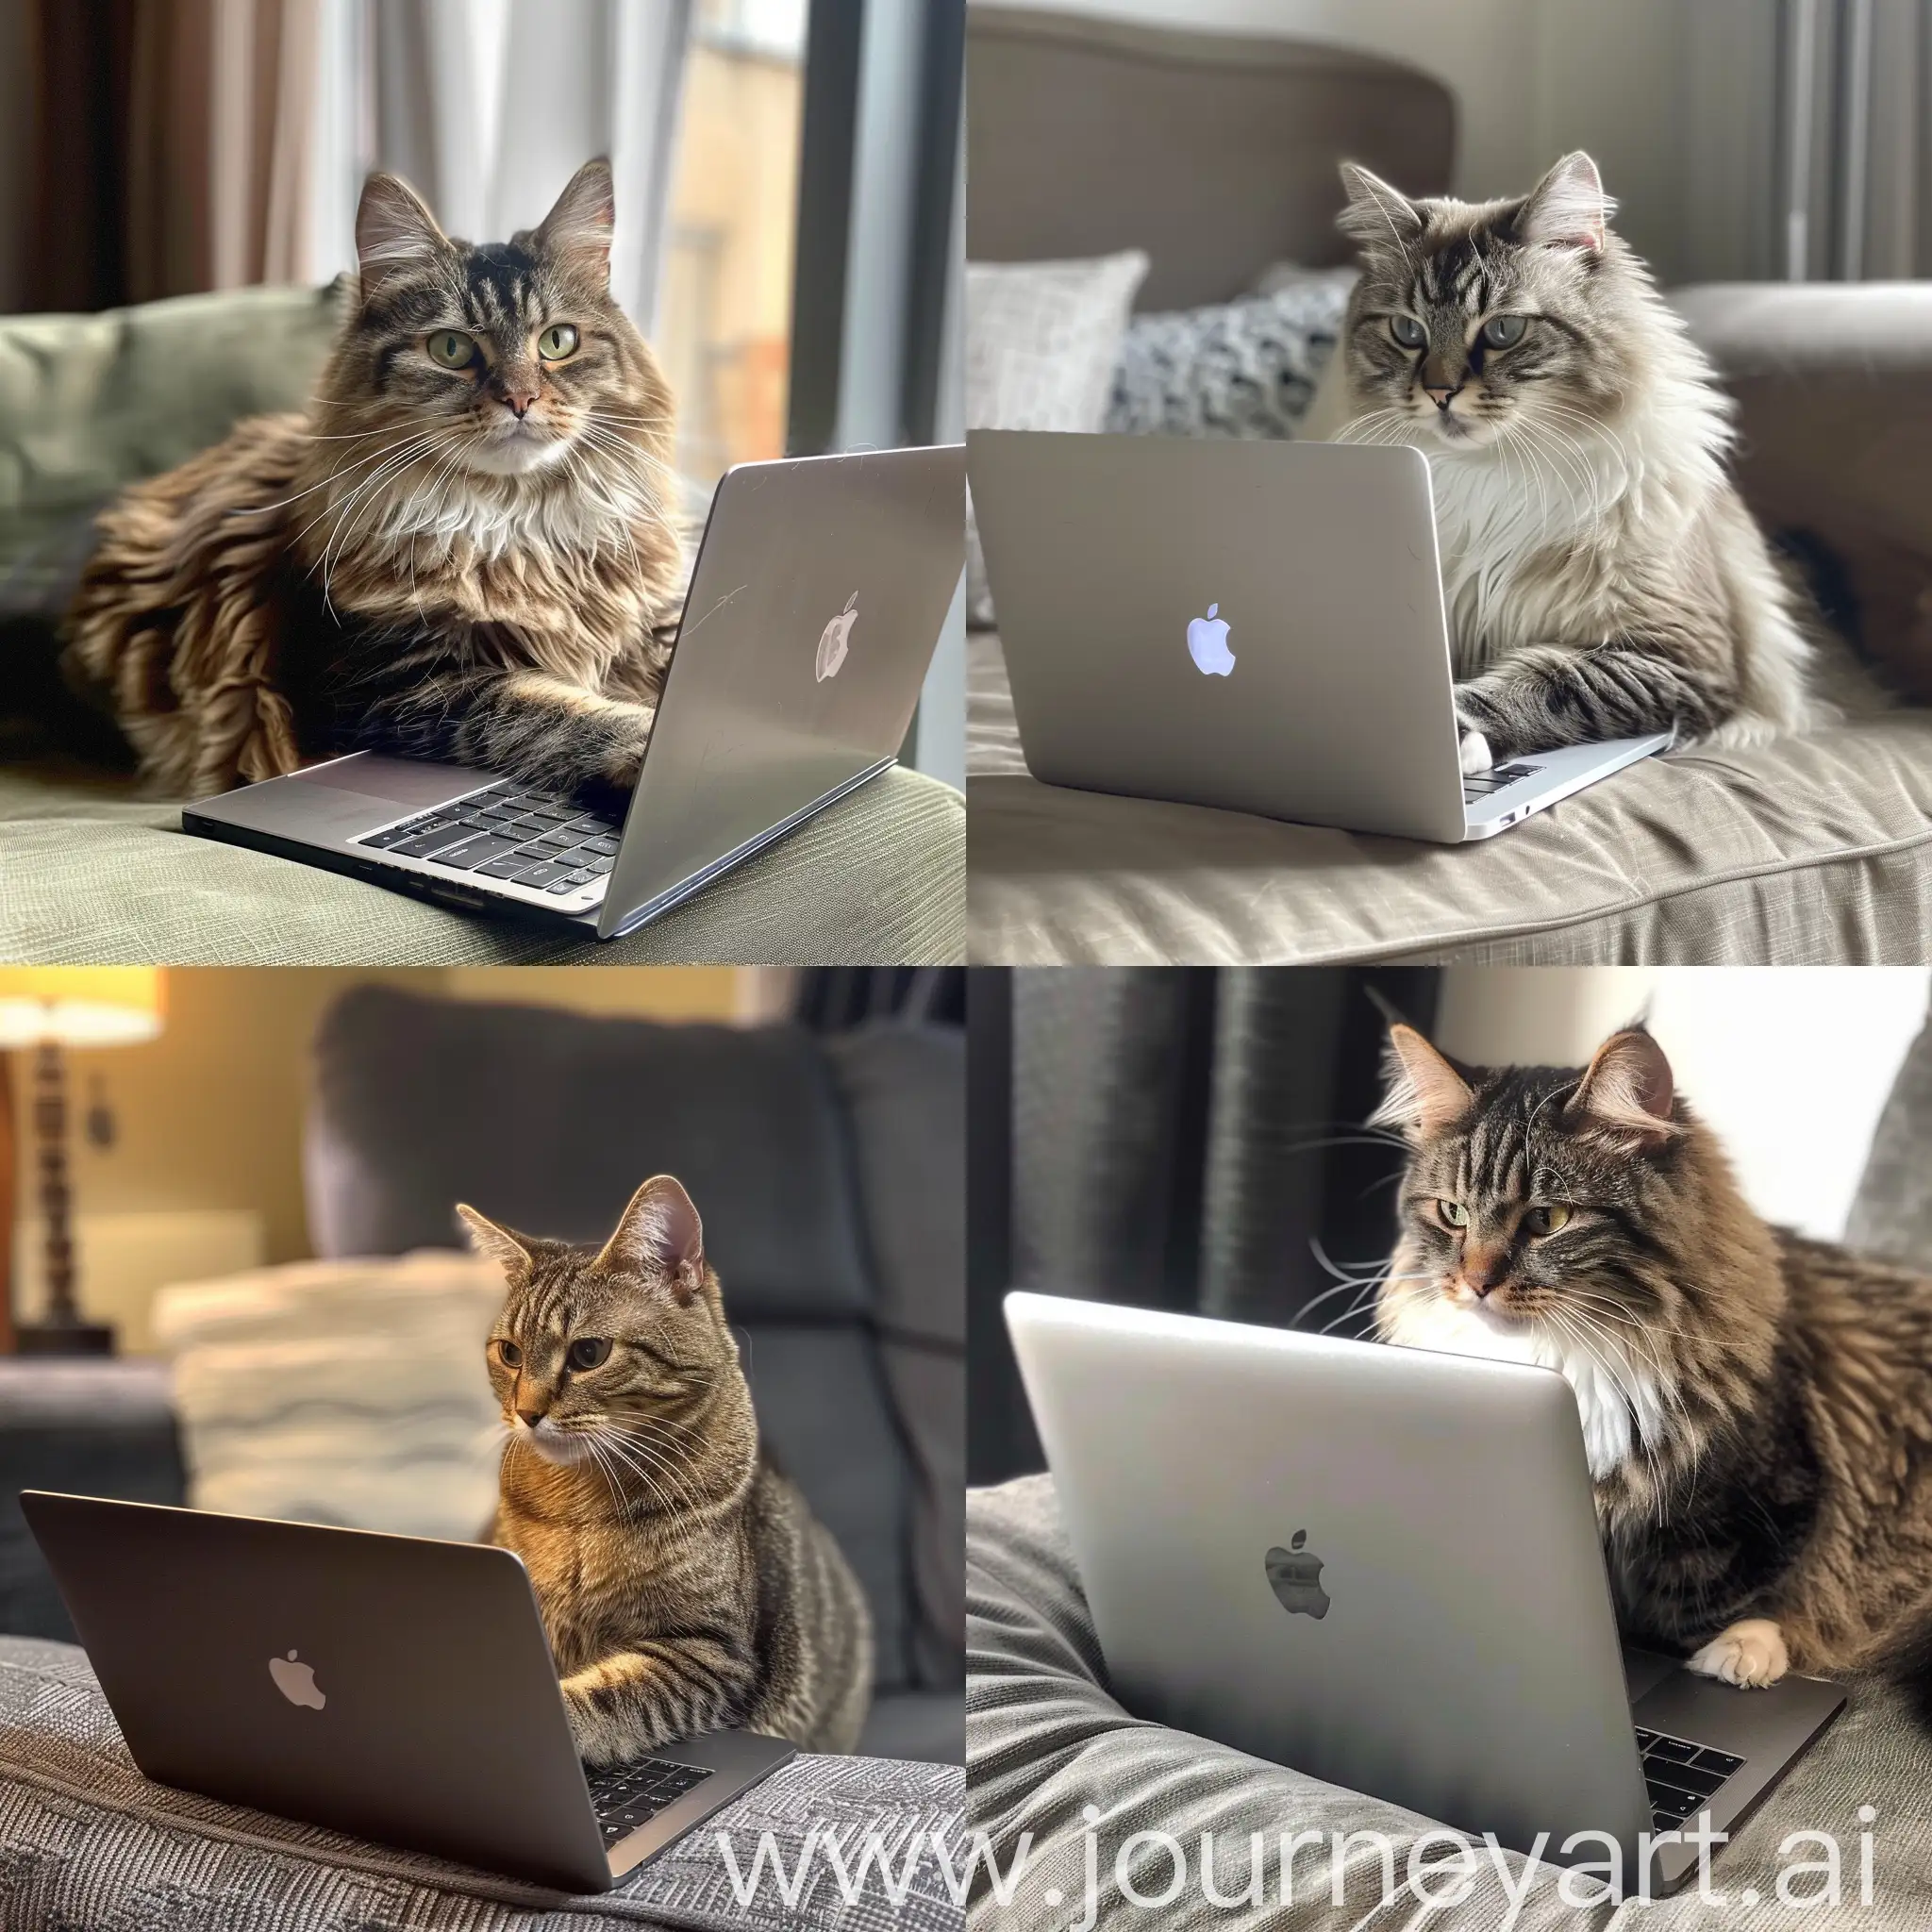 Adventurous-Cat-Working-on-Laptop-in-a-Modern-Setting